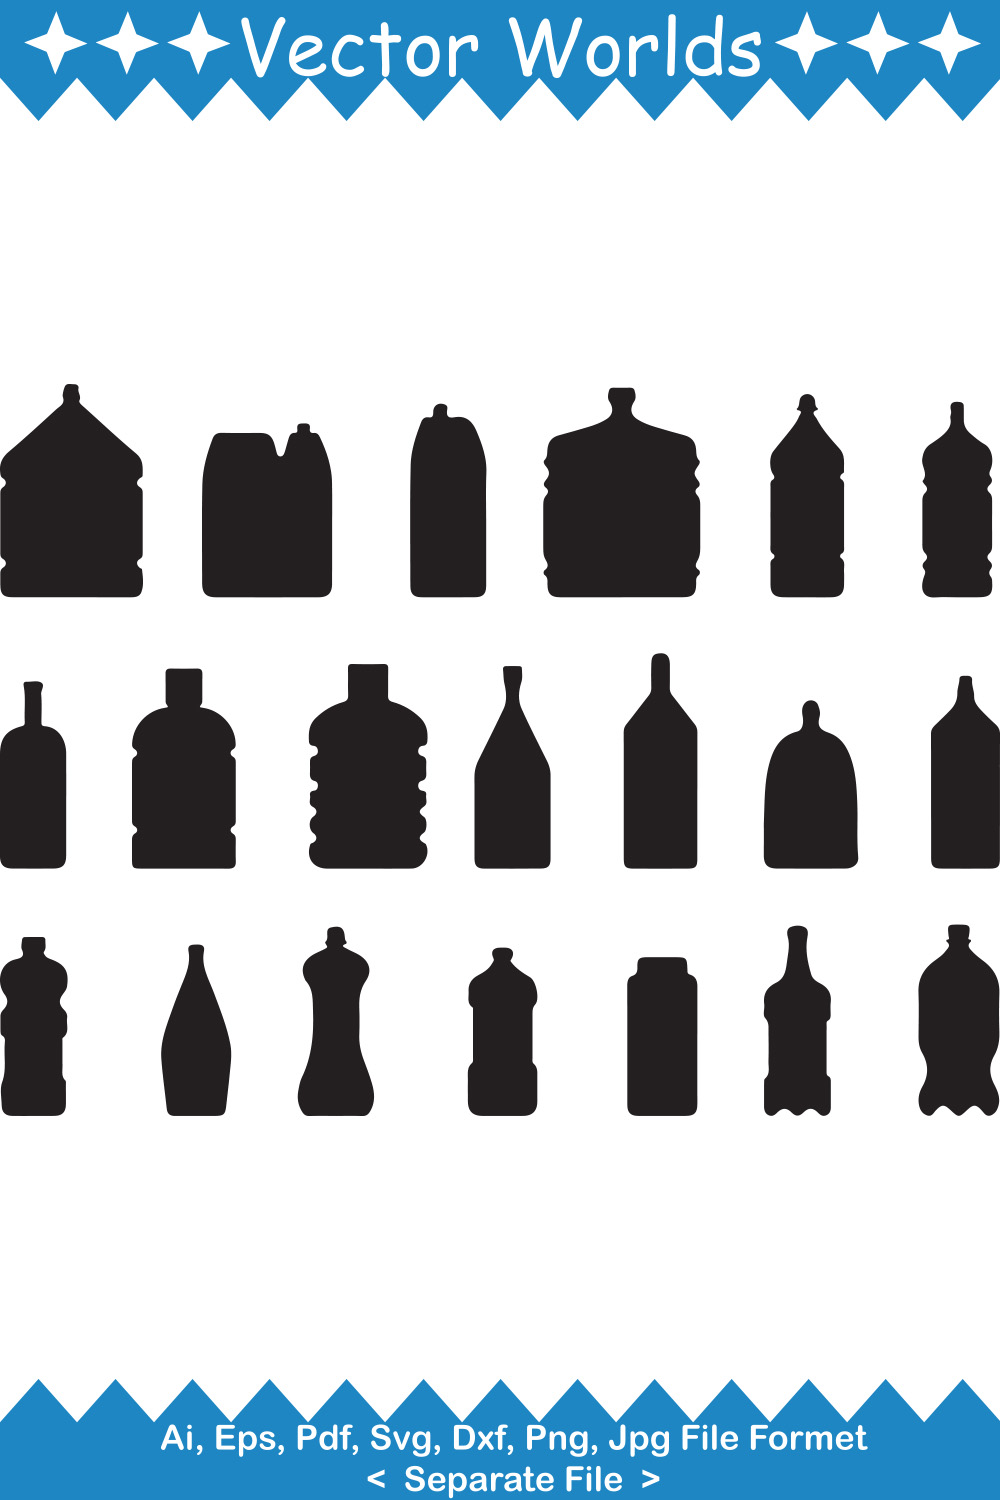 Plastic Bottle SVG Vector Design pinterest preview image.